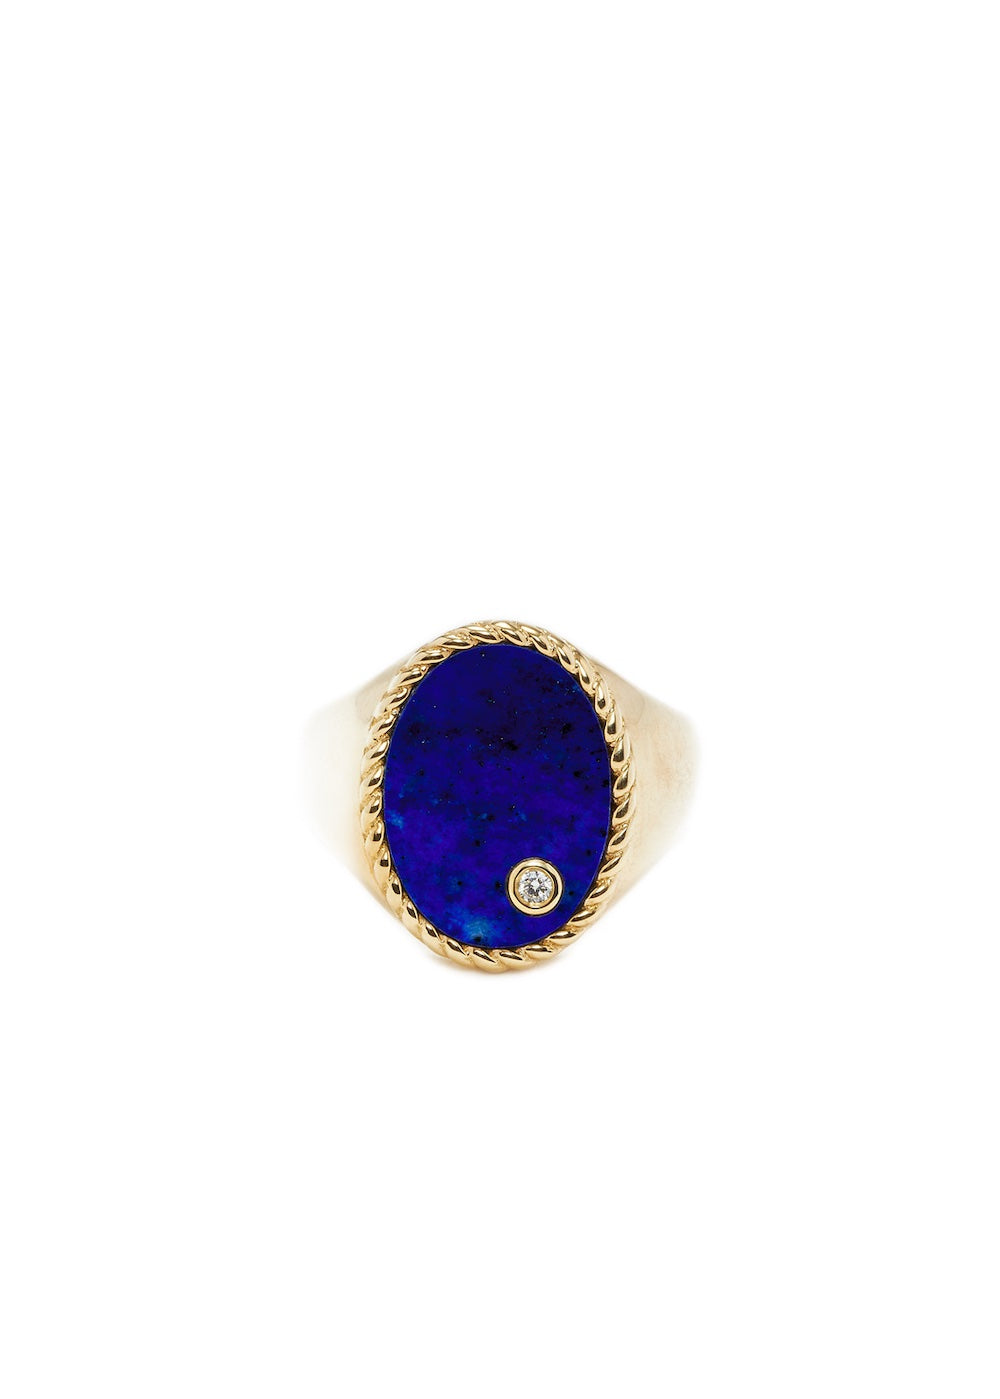 Chevalière Ovale 9k yellow gold, diamond and lapis lazuli signet ring